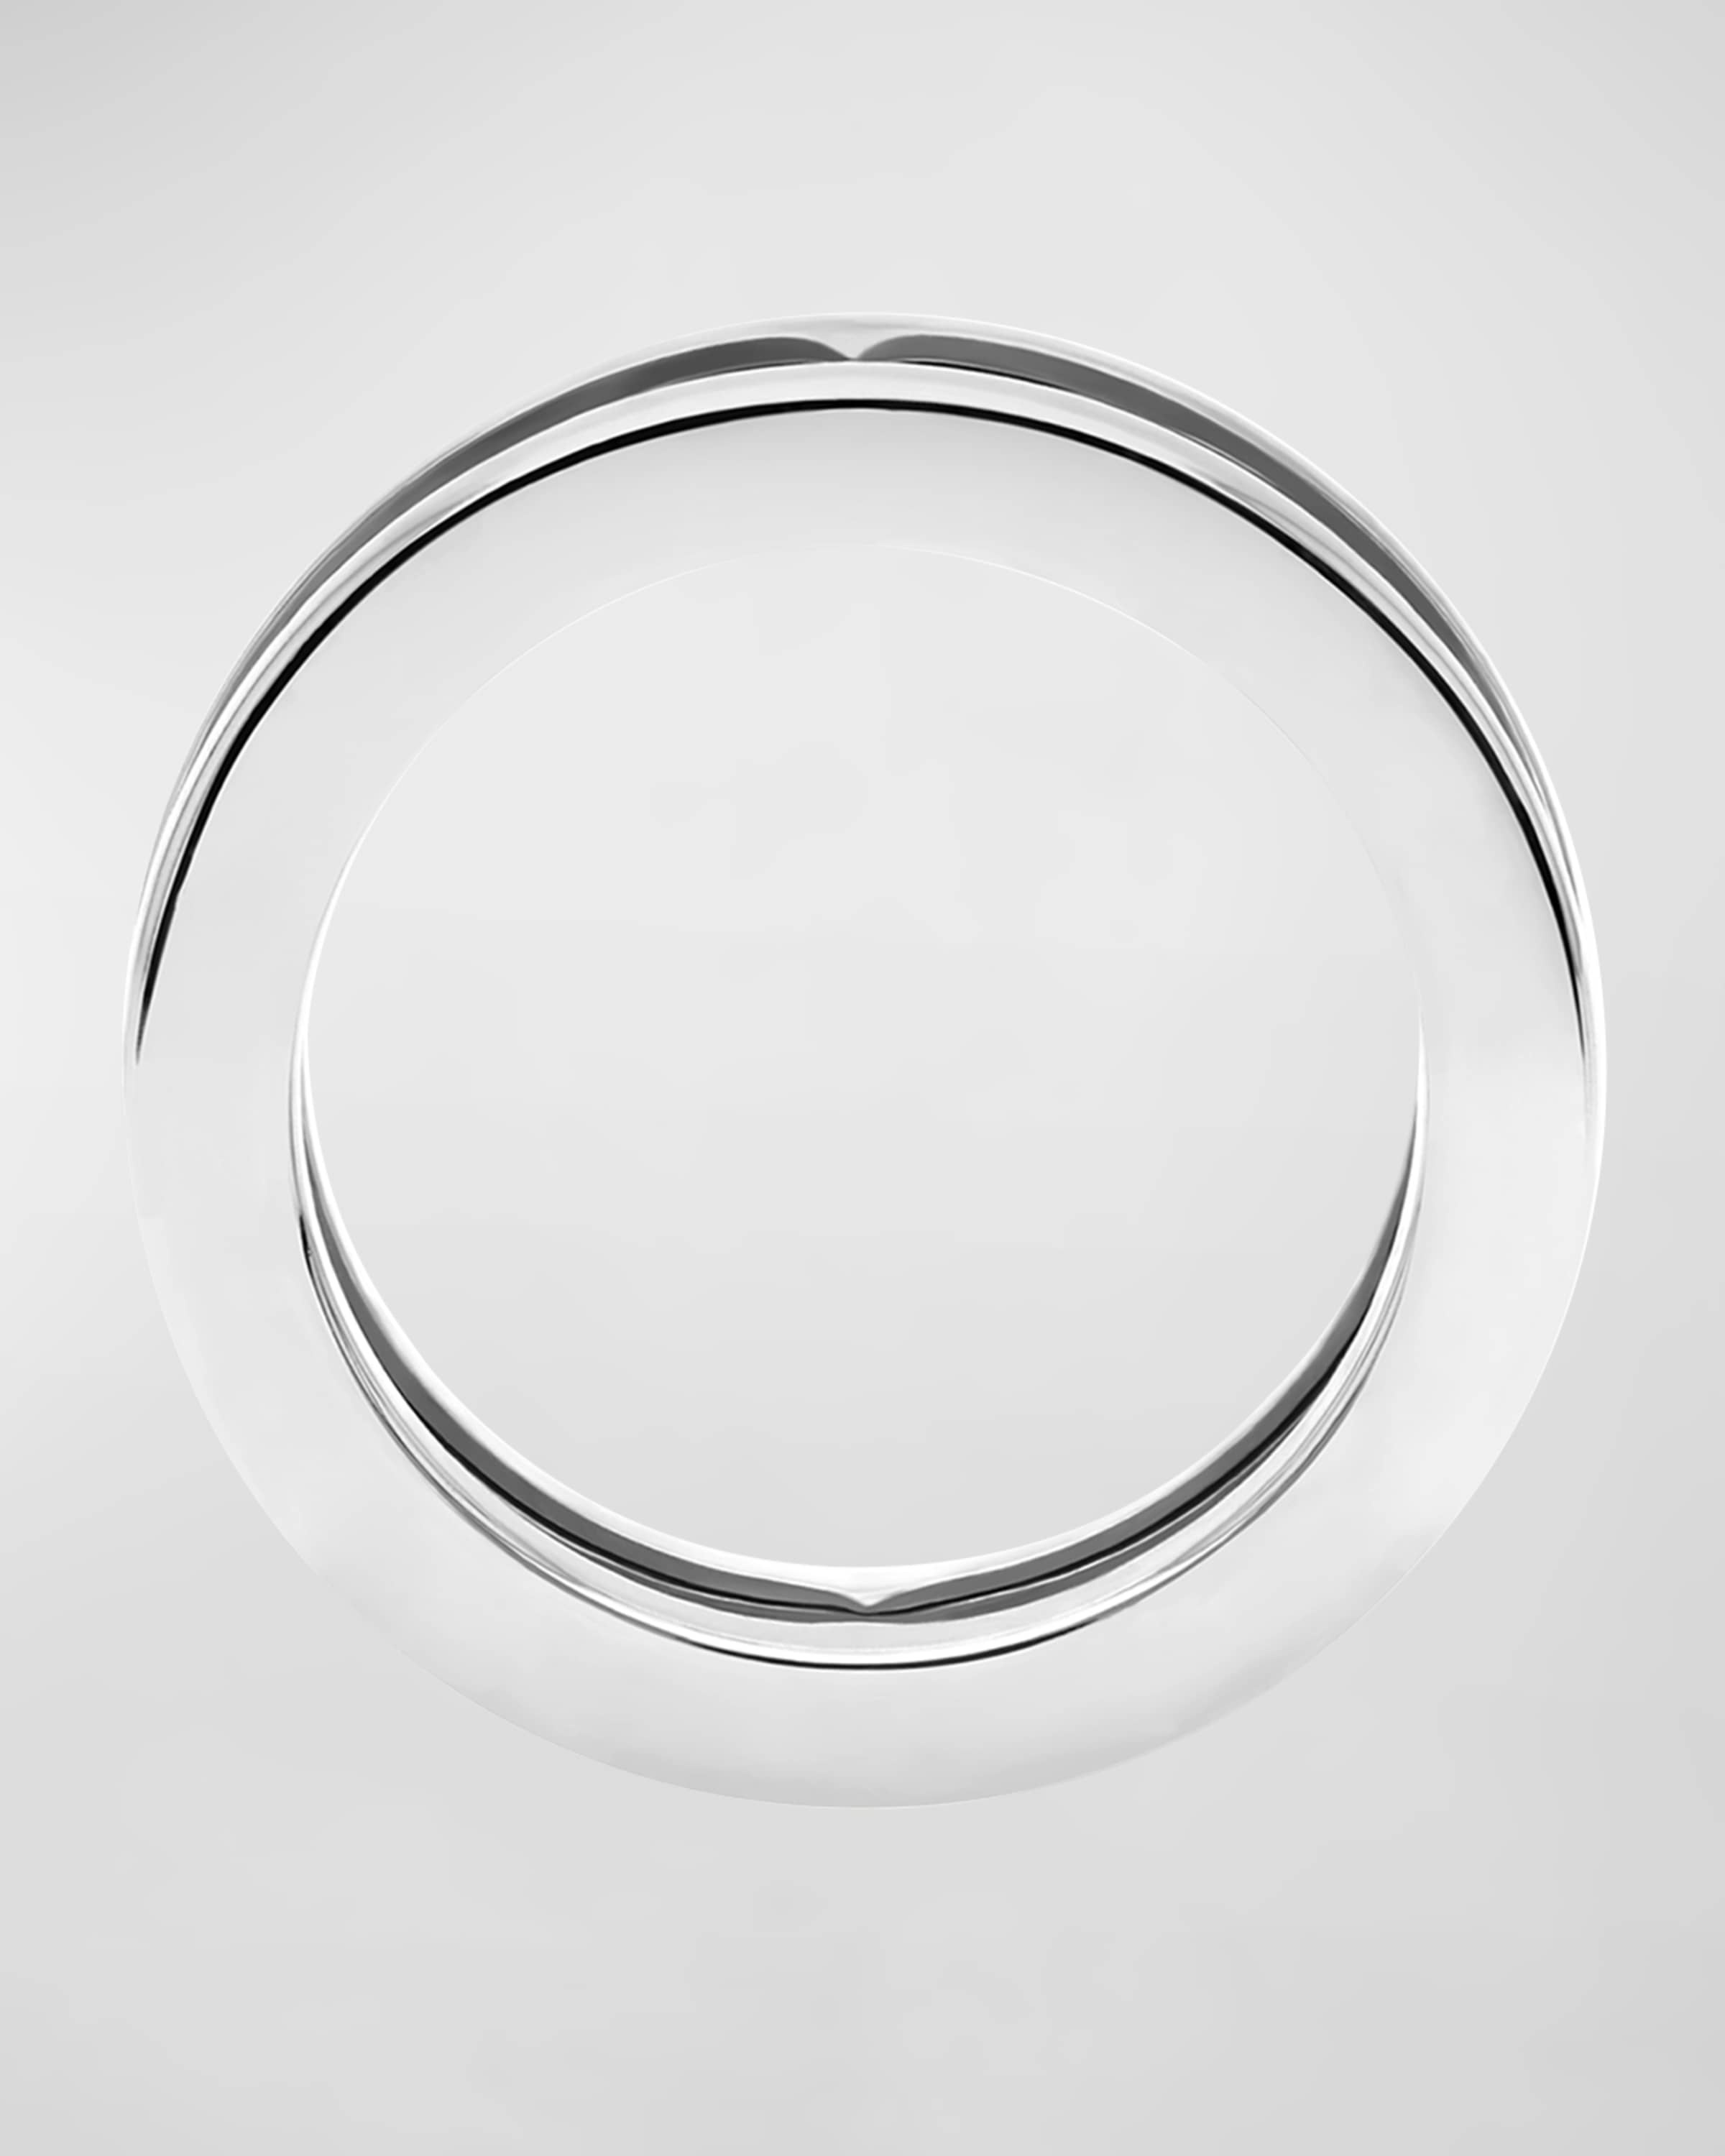 B.Zero1 White Gold 1-Band Logo Ring, EU 51 / US 5.75 - 3